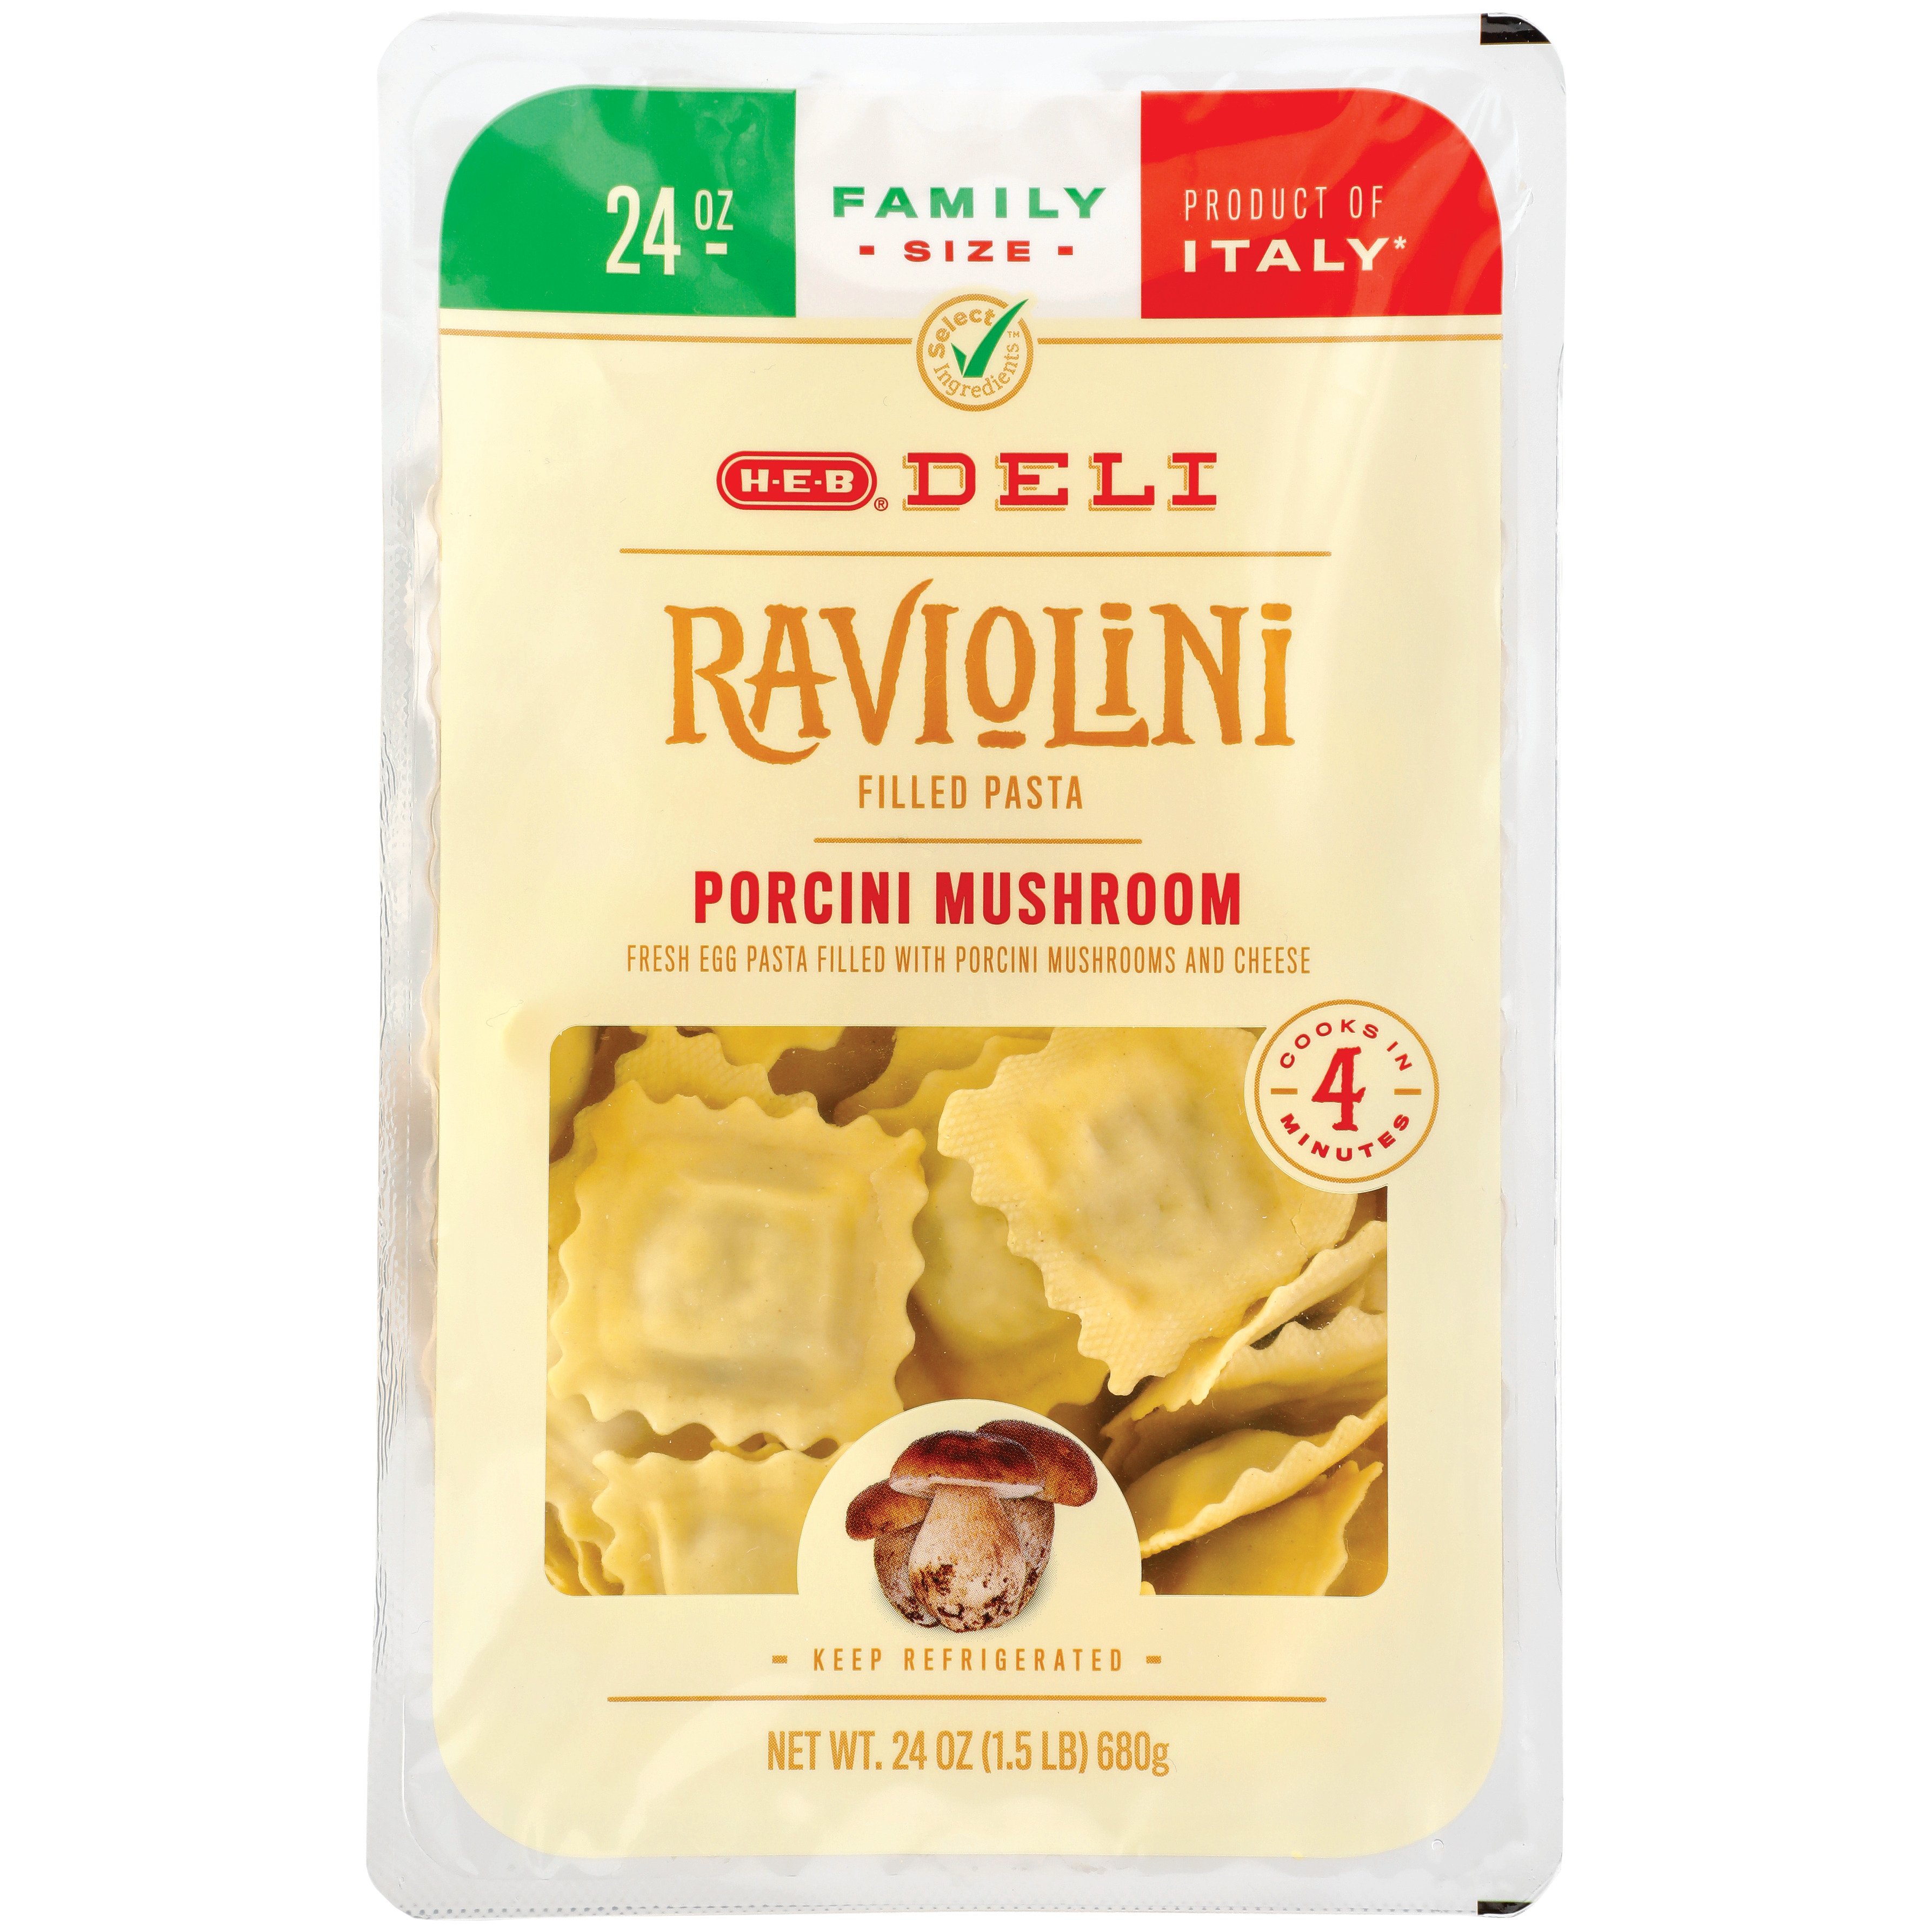 H-E-B Raviolini Filled Pasta with Porcini Mushrooms, Family Size - Shop  Ready Meals & Snacks at H-E-B